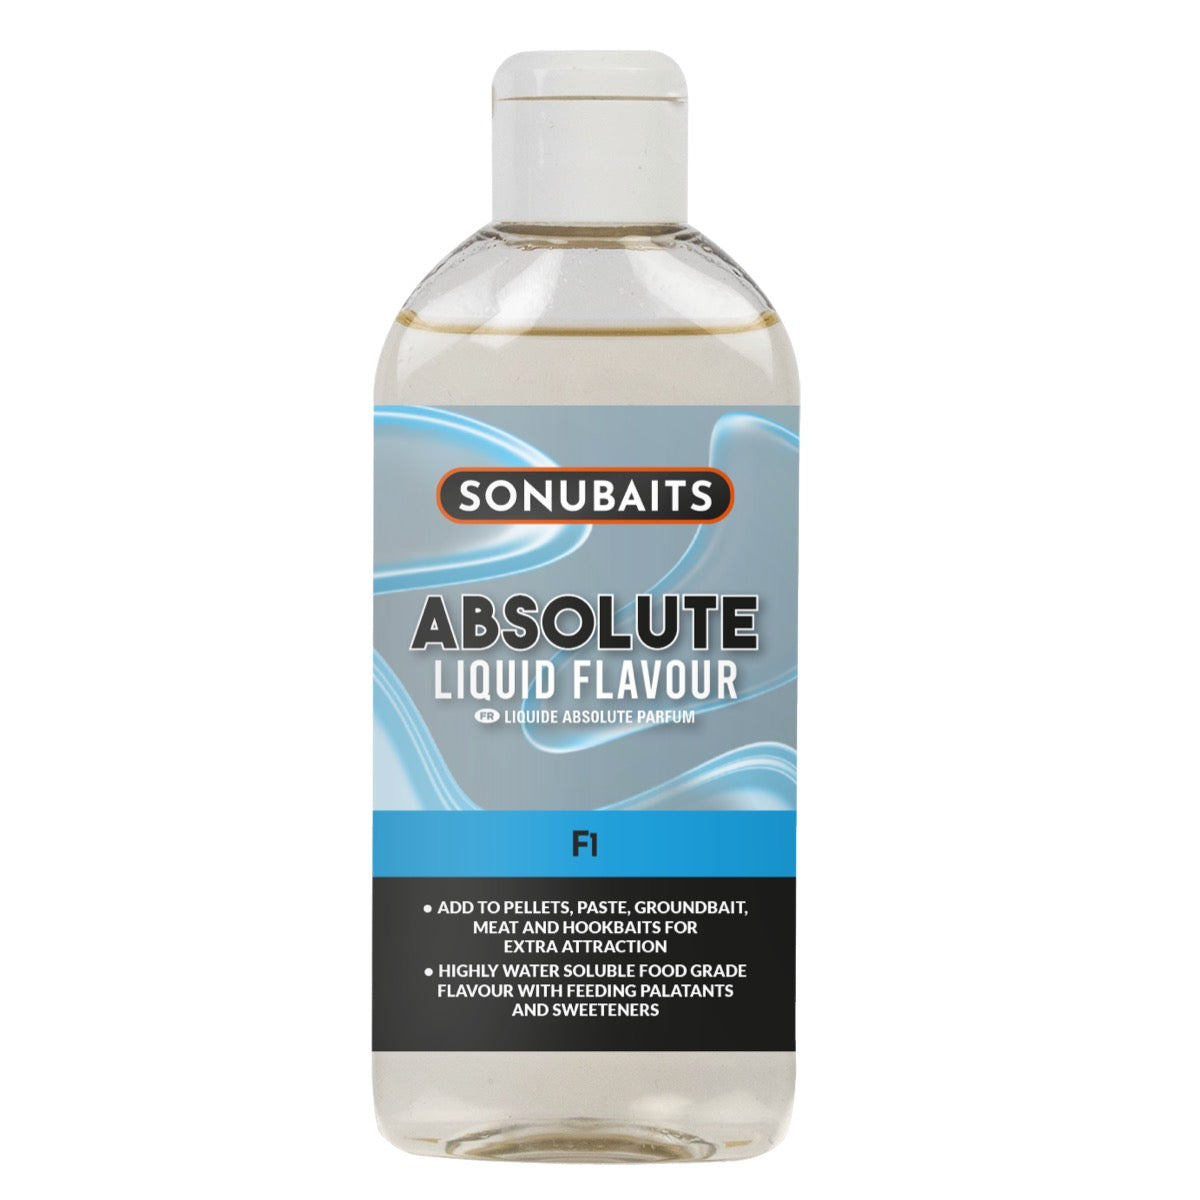 Sonubaits absolute liquid flavour F1